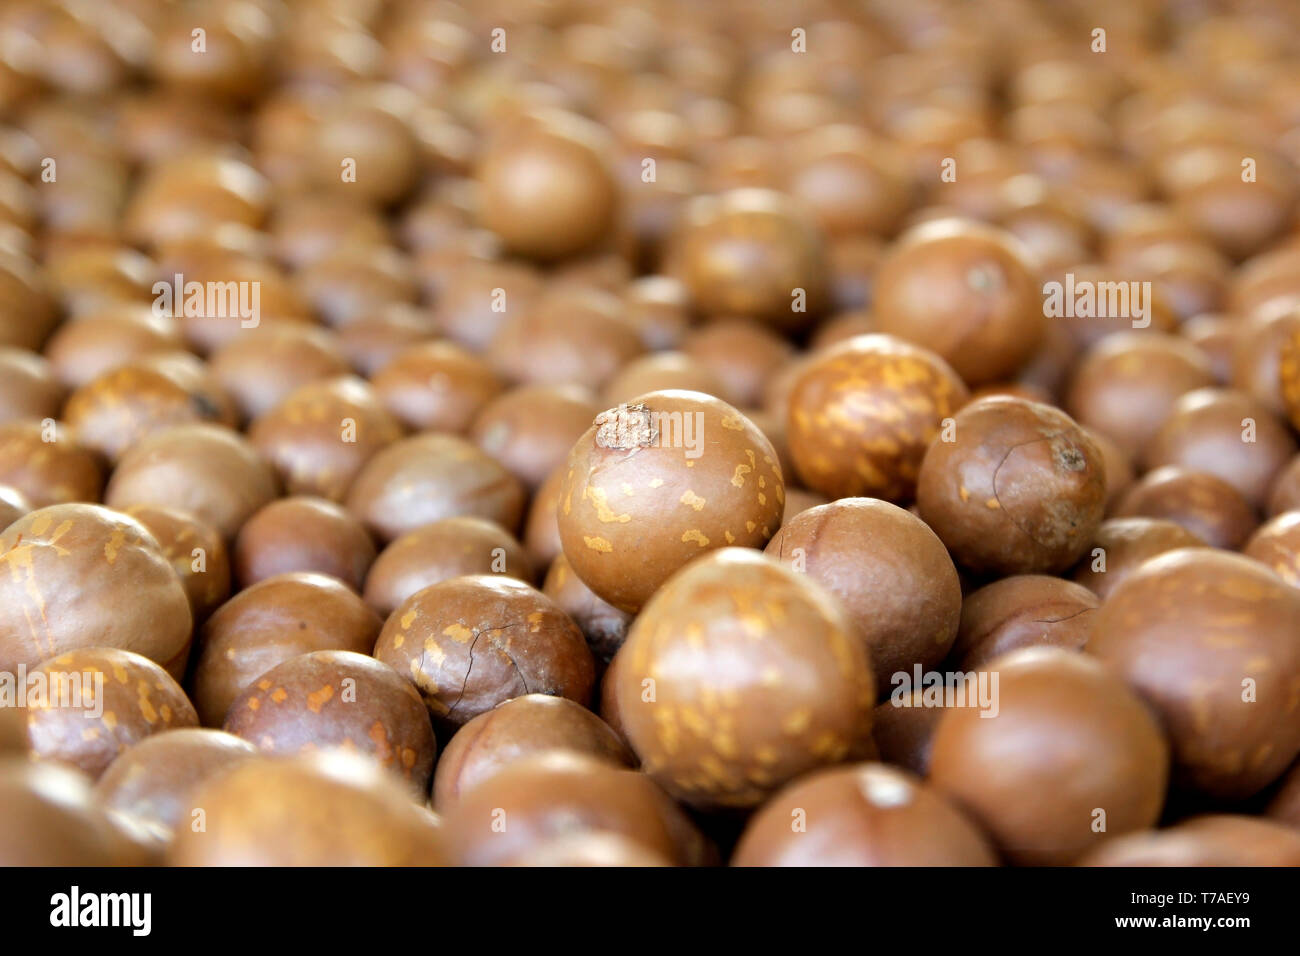 antioxidant fruits, pile of macadamia nuts background Stock Photo